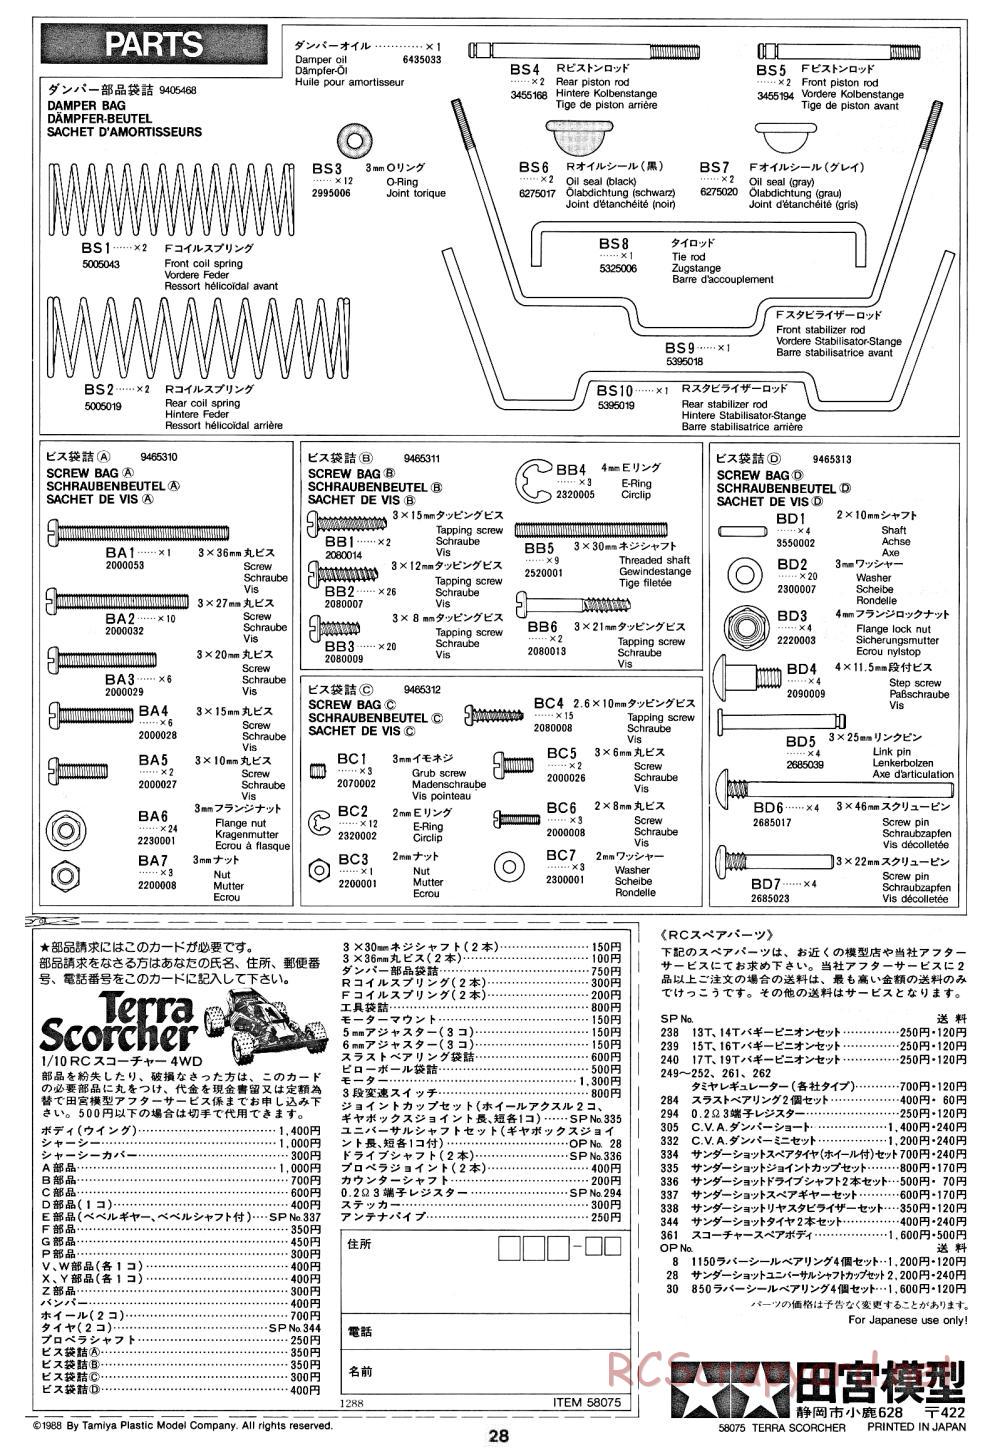 Tamiya - Terra Scorcher - 58075 - Manual - Page 28